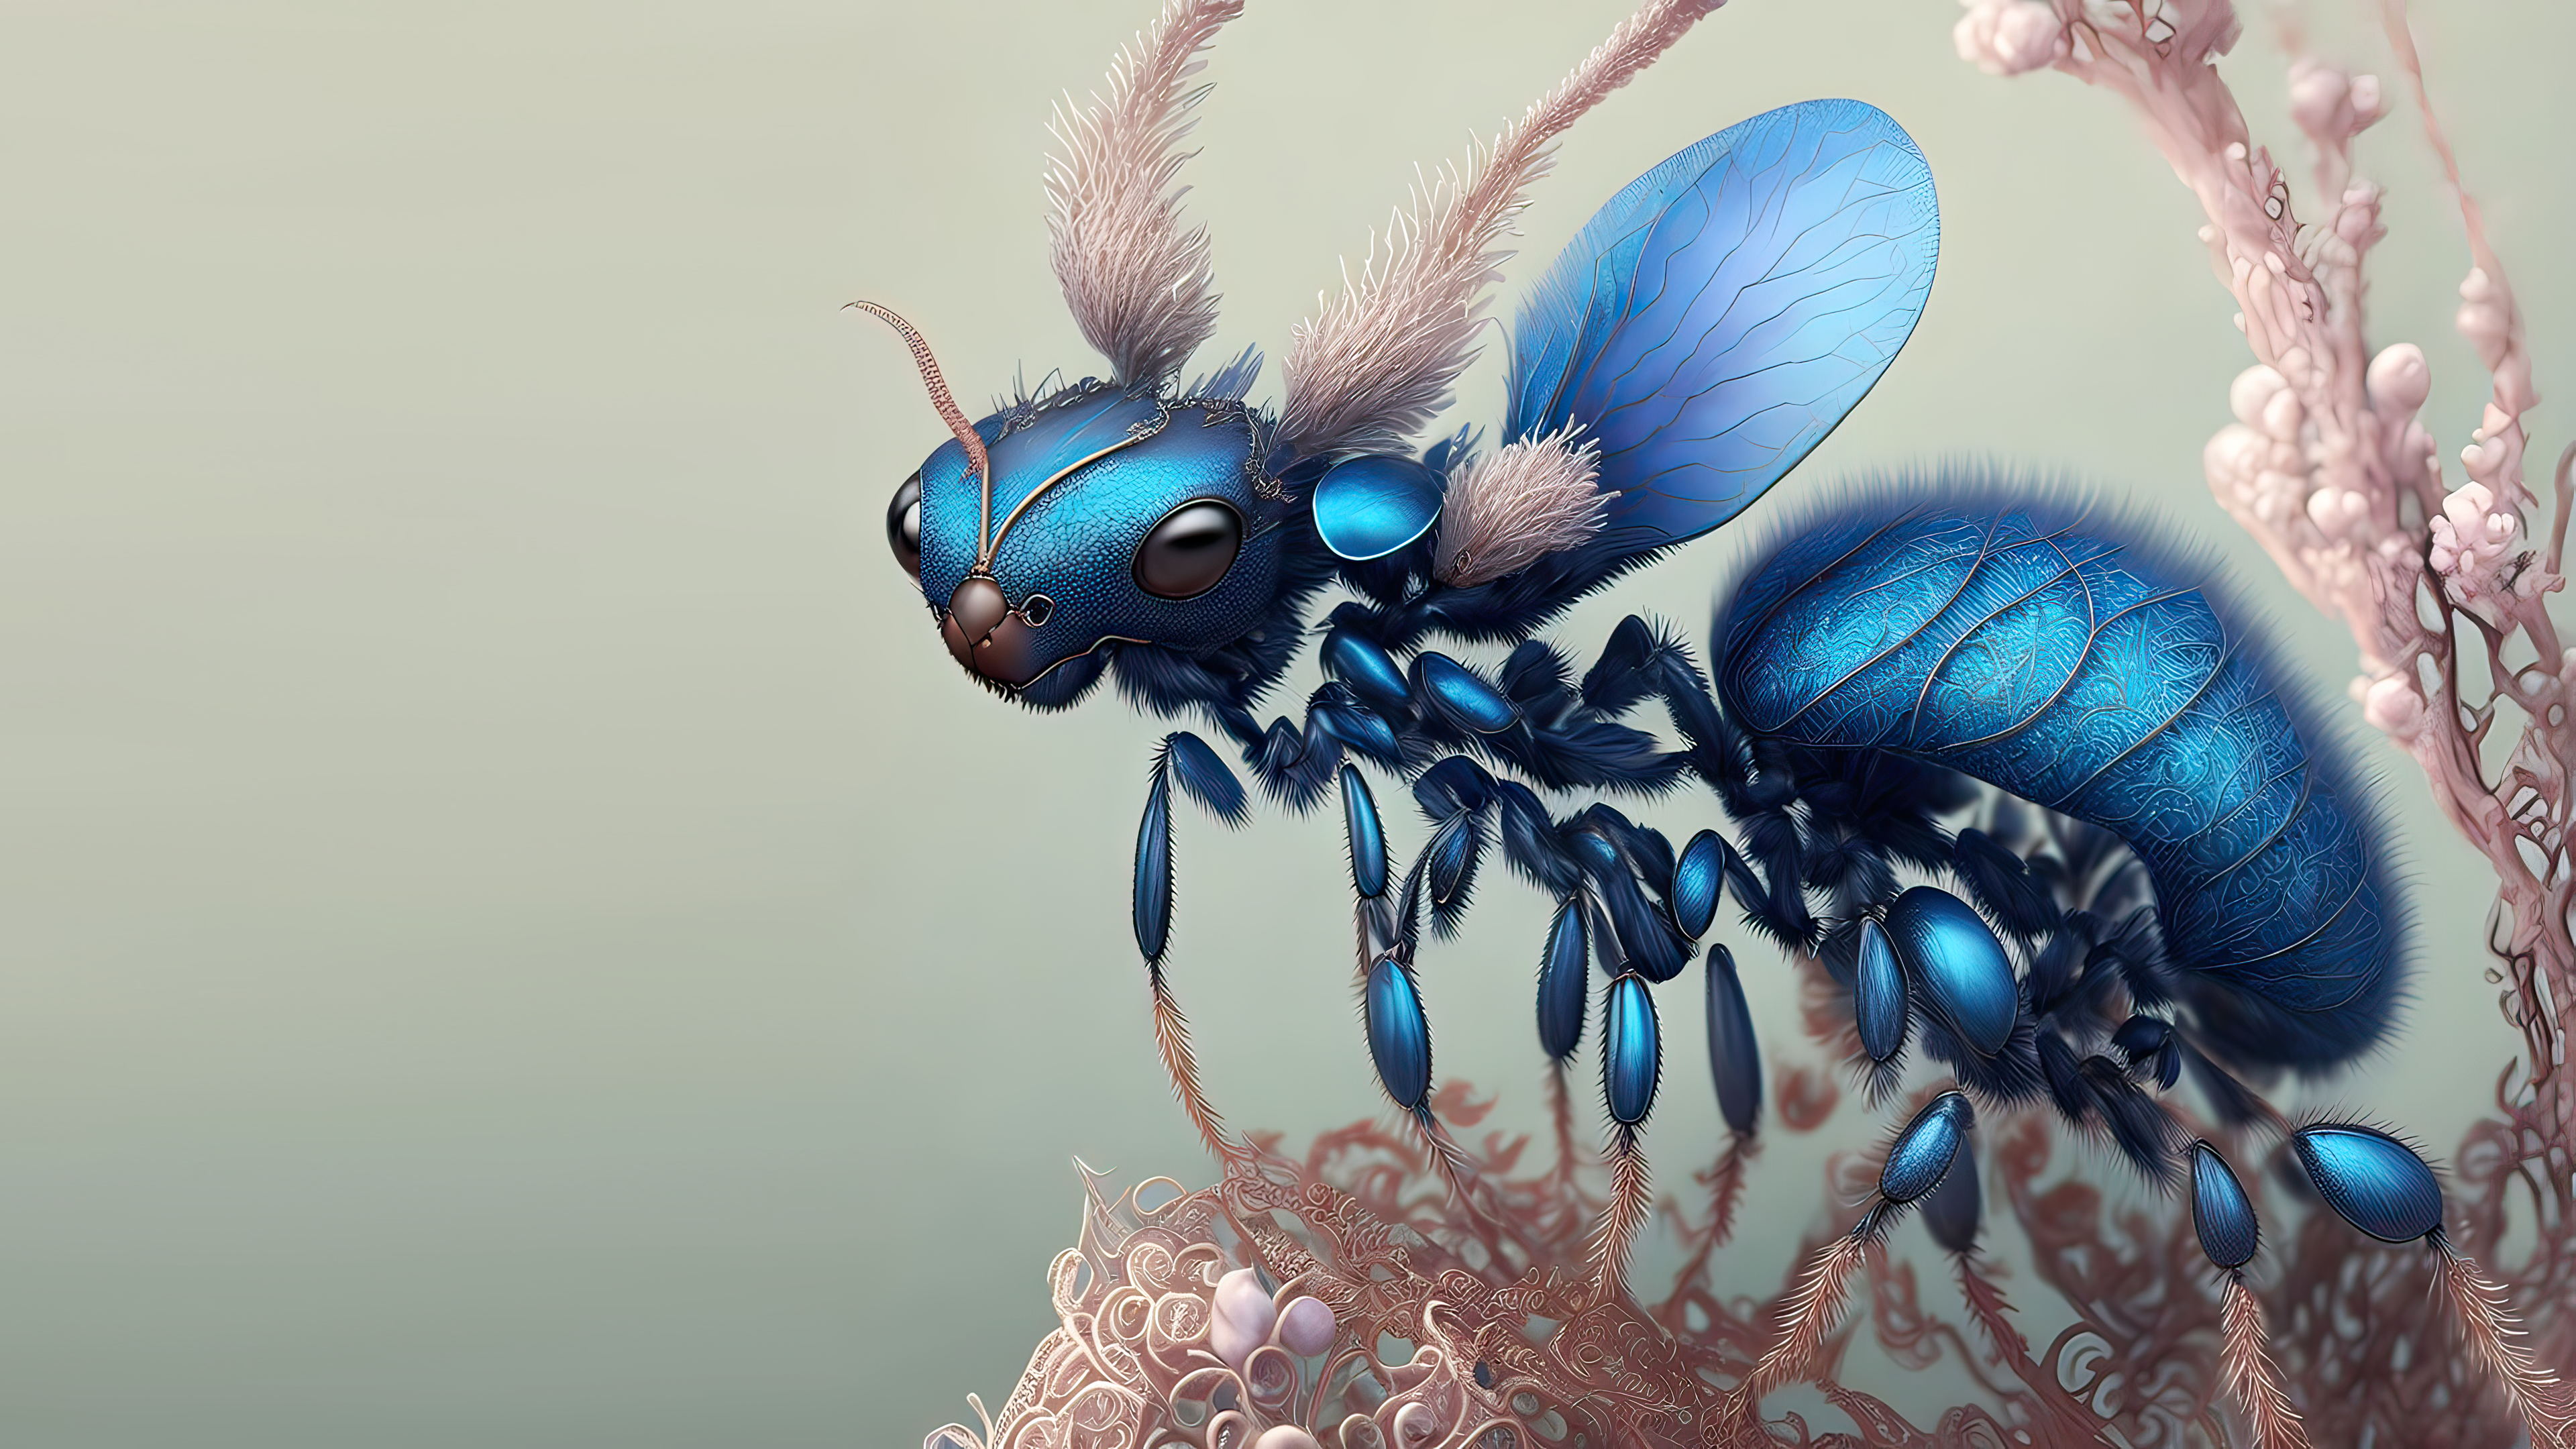 General 3840x2160 AI art insect blue glossy simple background minimalism digital art